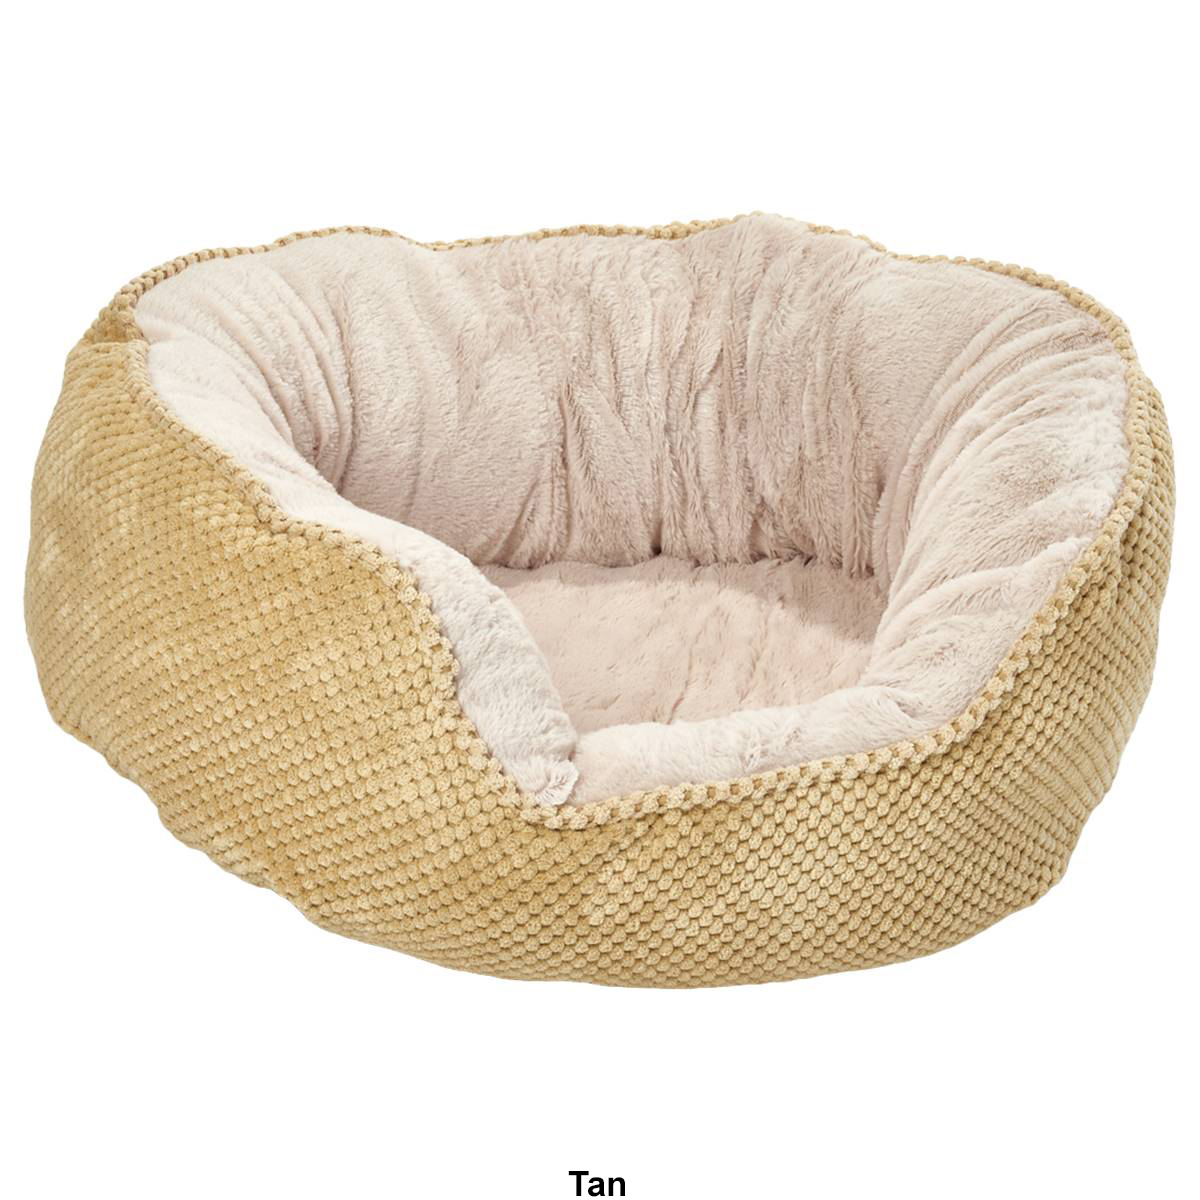 Comfortable Pet Oval Cuddler Bed